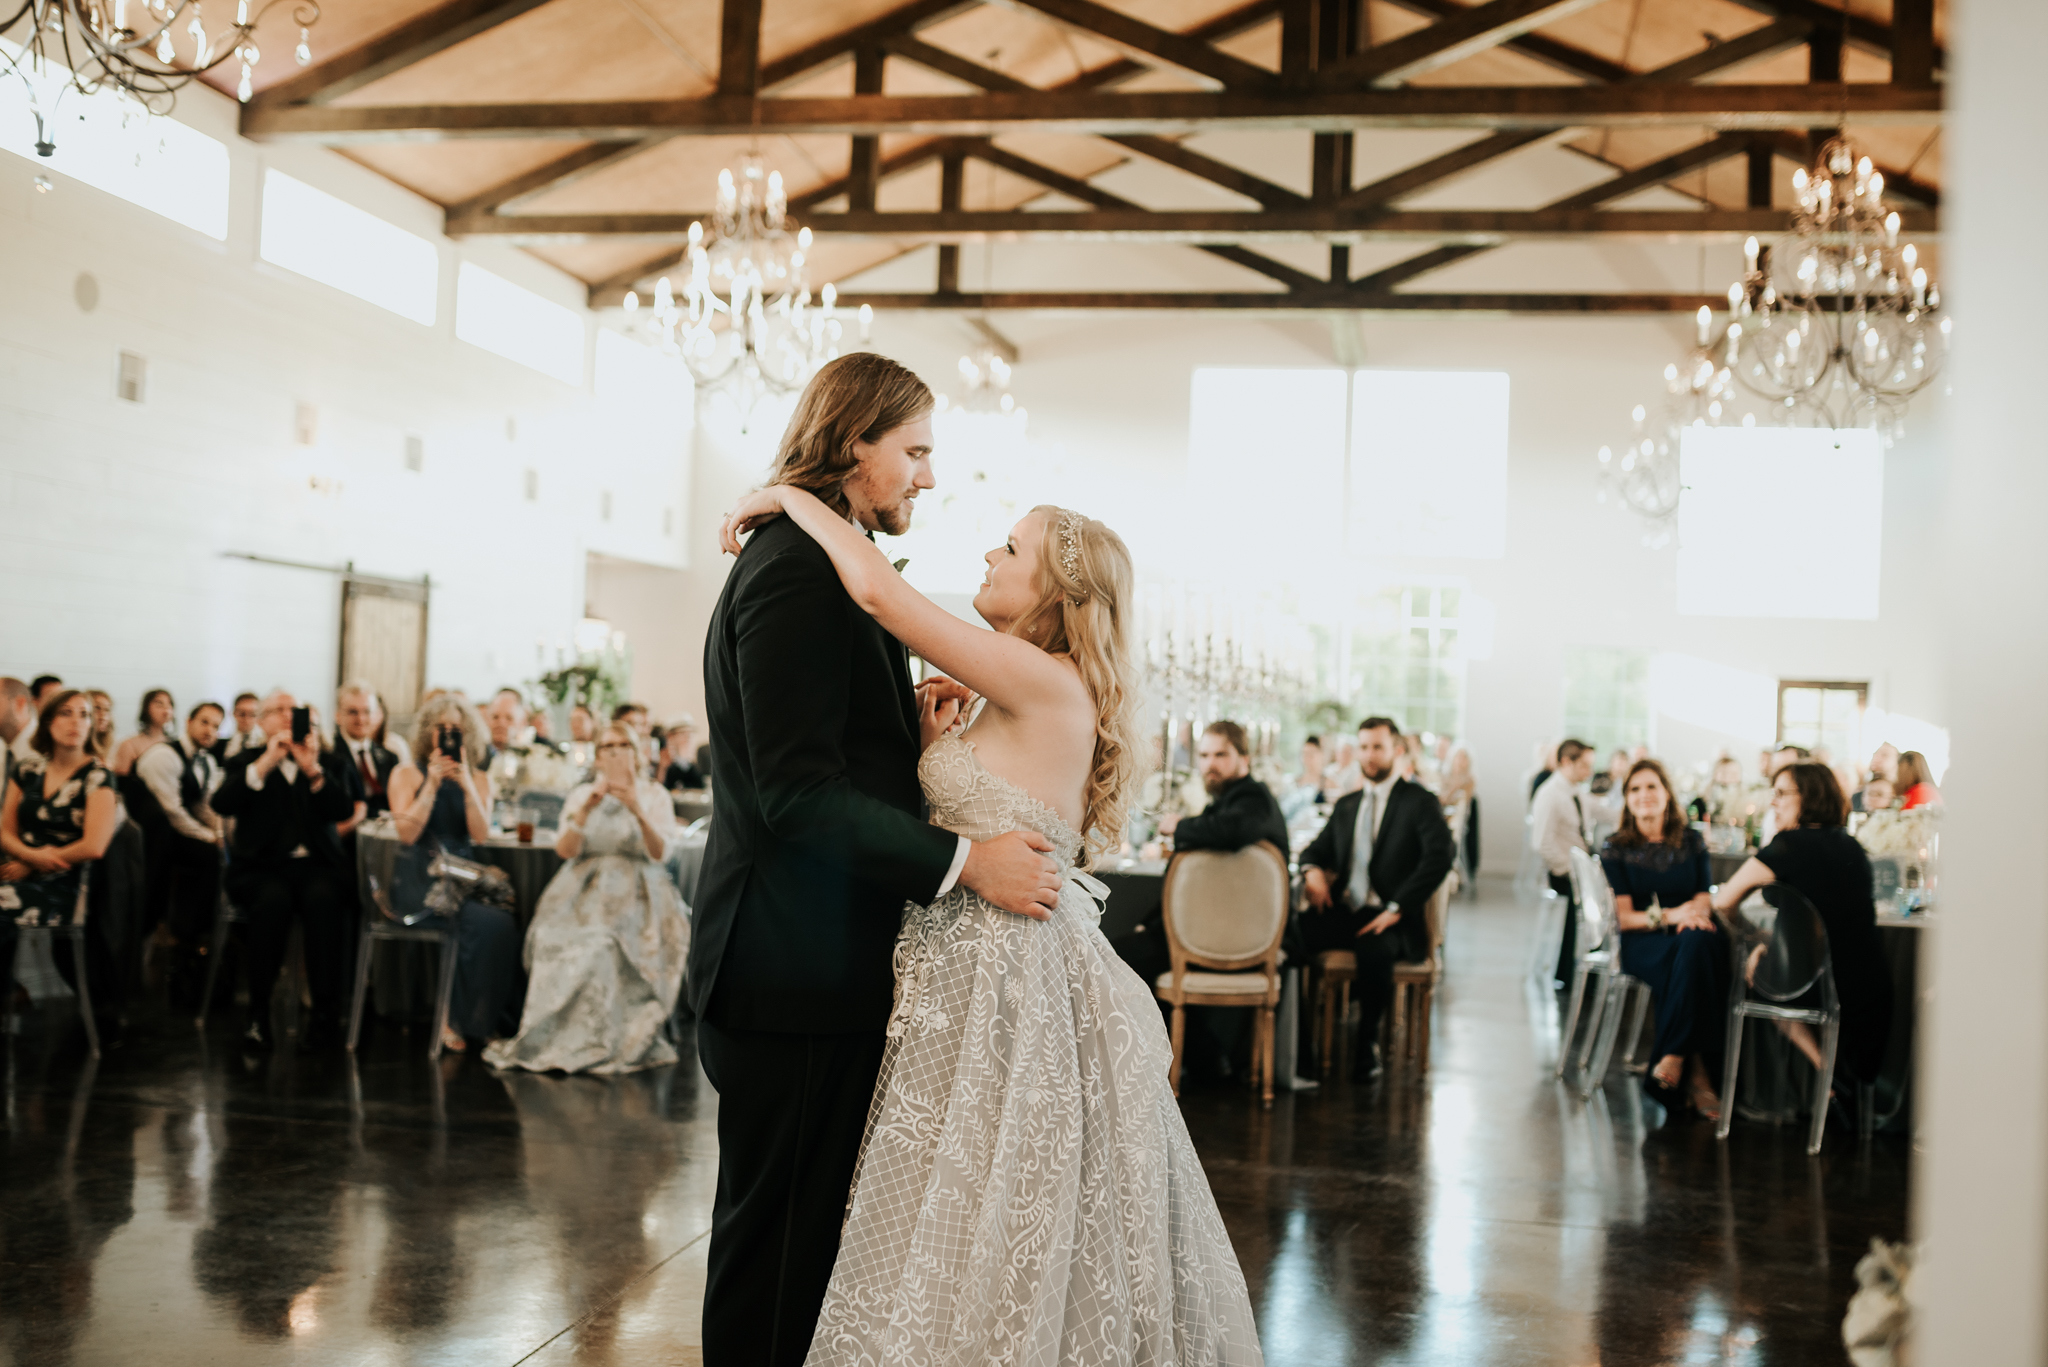 Leah Nicole Photography - Houston Wedding Photographer-Venue 311 Wedding- Houston Wedding Photographer -Kristen Giles Photography-15.jpg